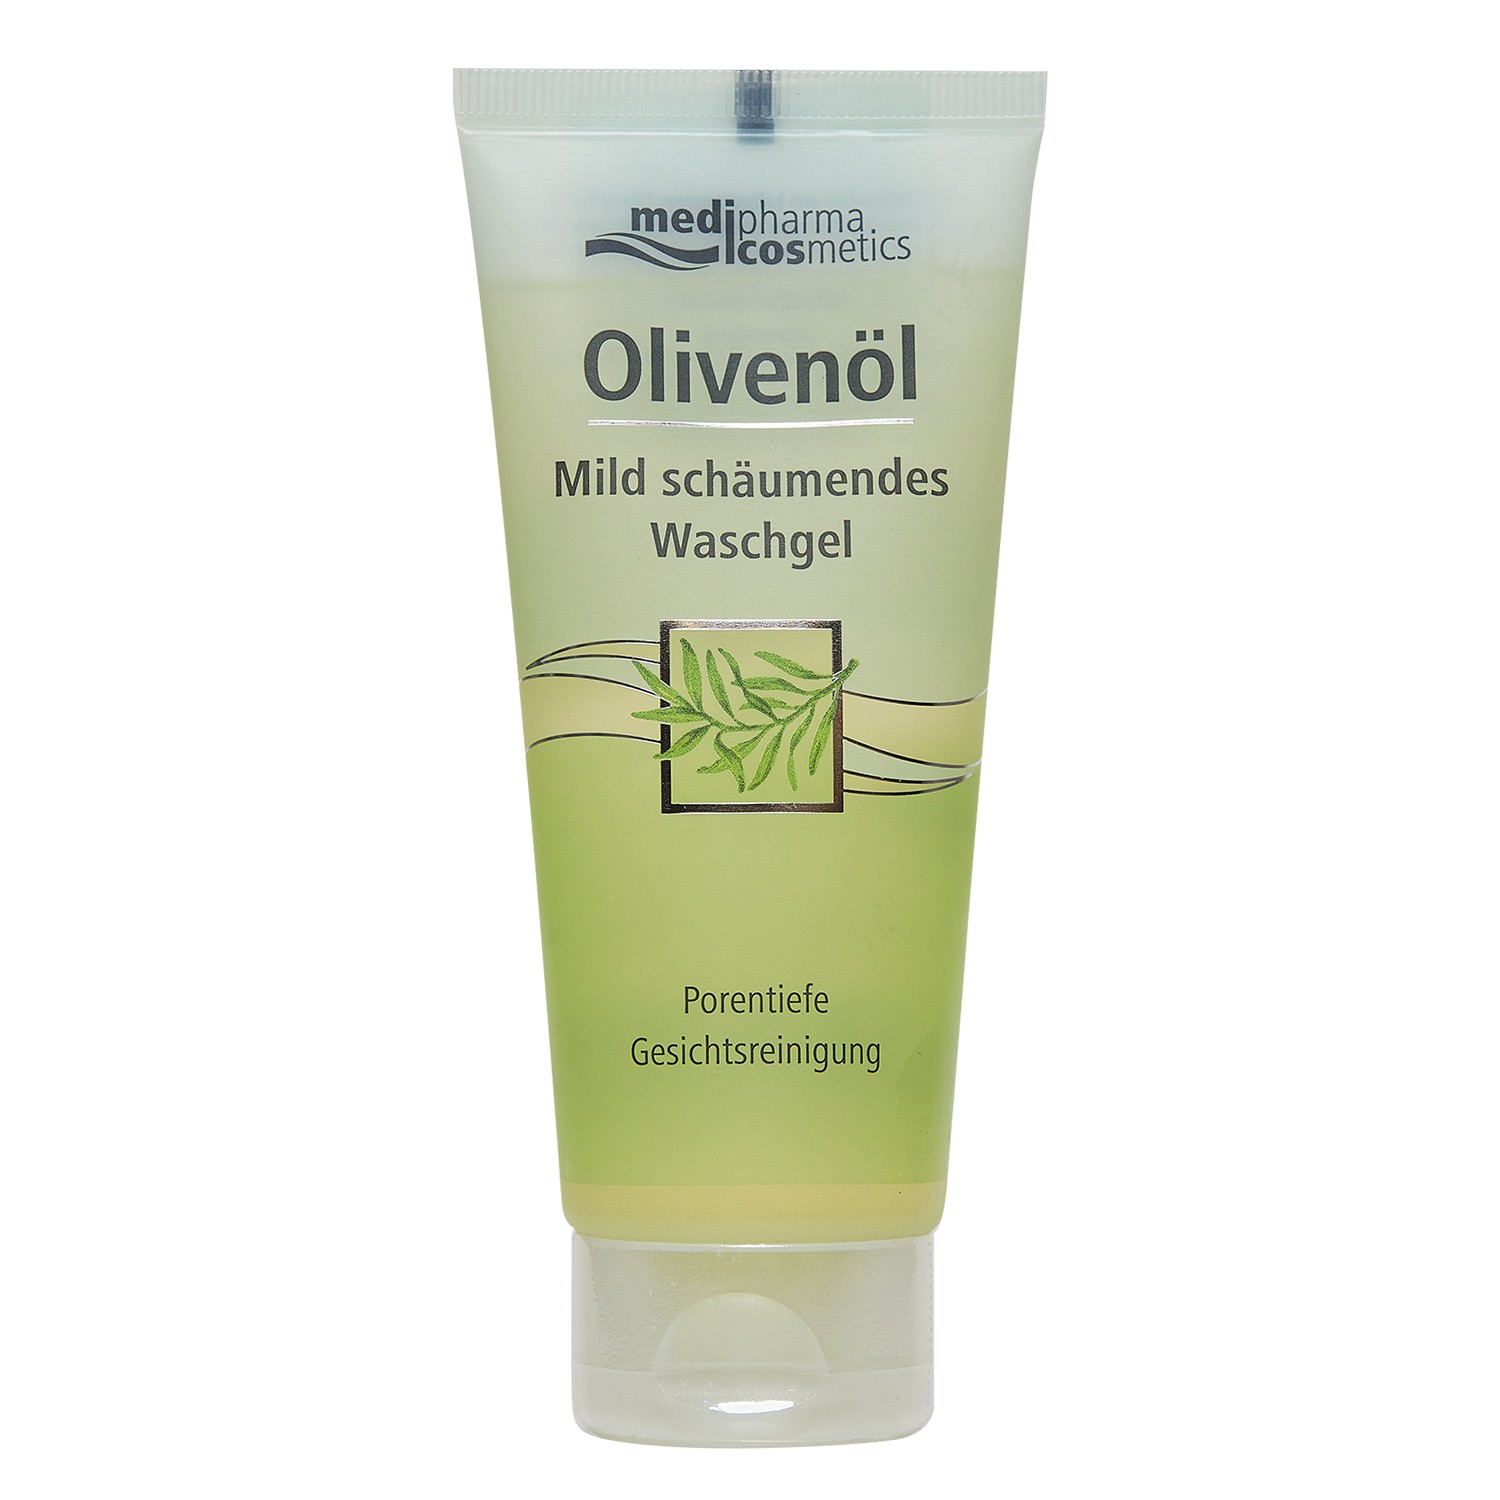 Medipharma Cosmetics Пенящийся гель для умывания Olivenol, 1